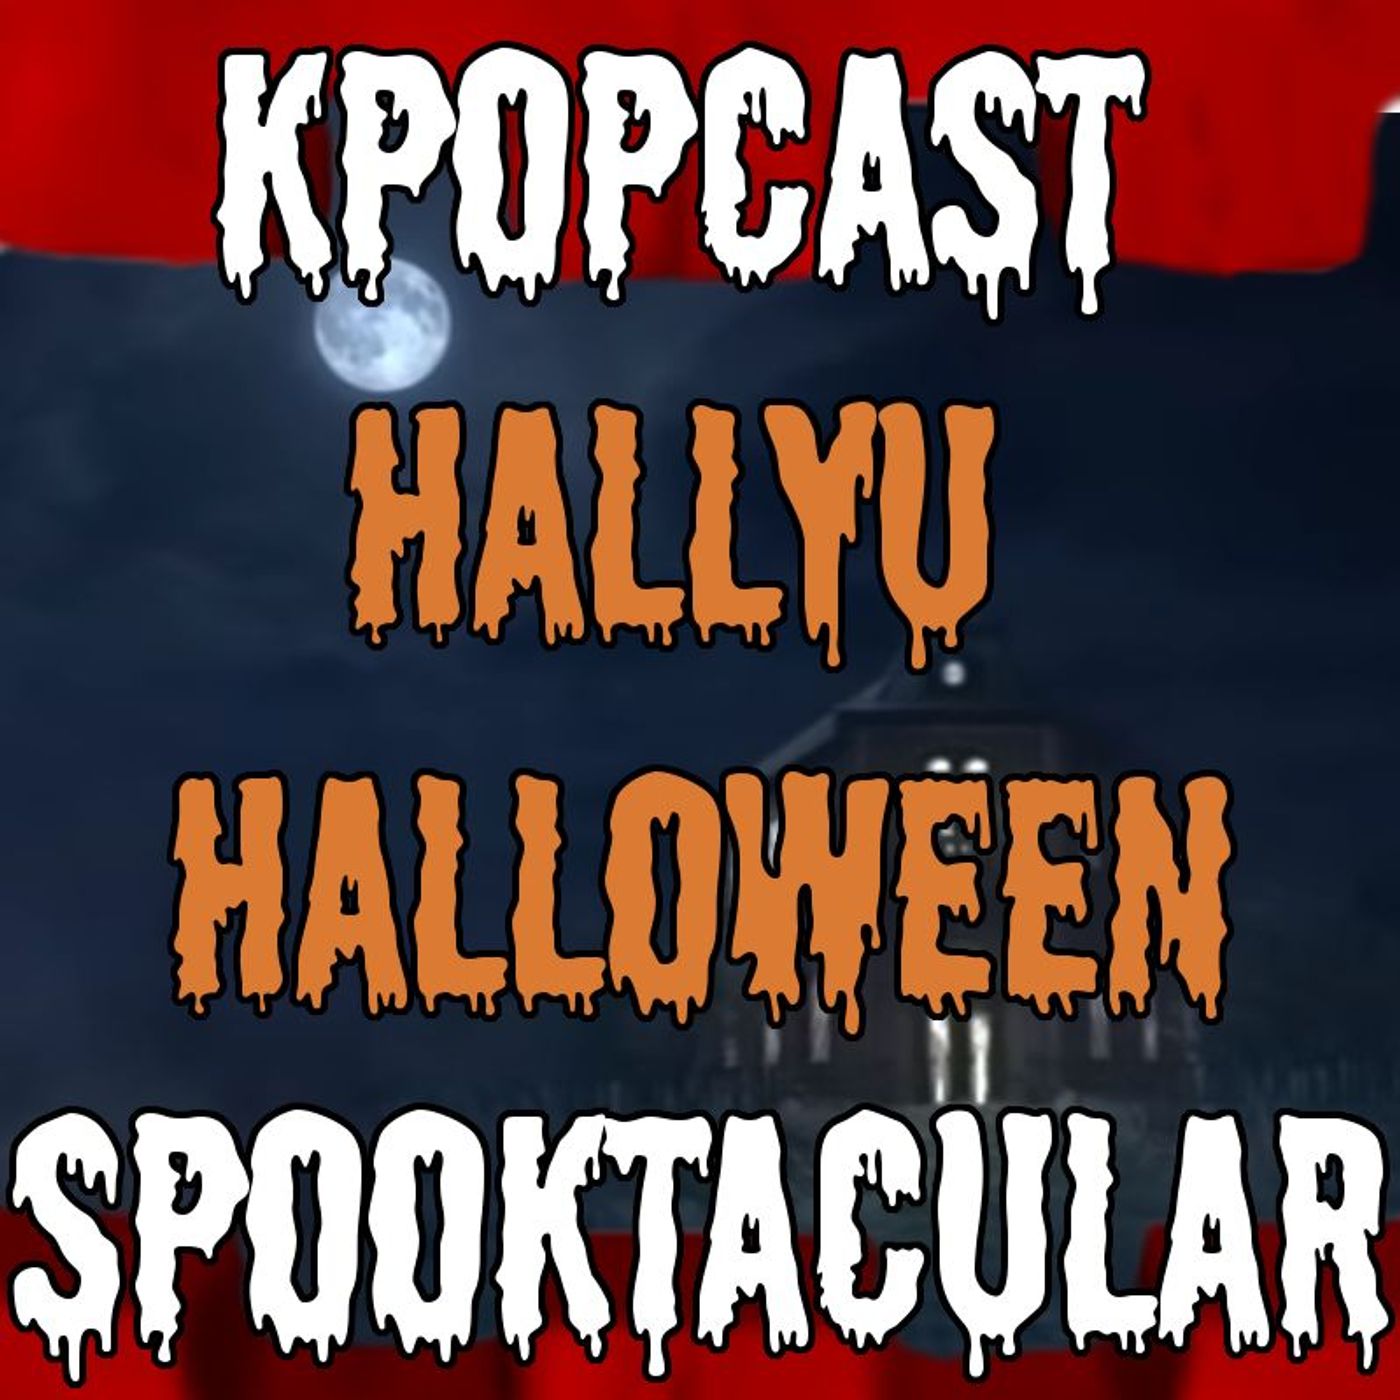 Kpopcast Hallyuween Spooktacular: Top 10 Kpop Songs for Halloween